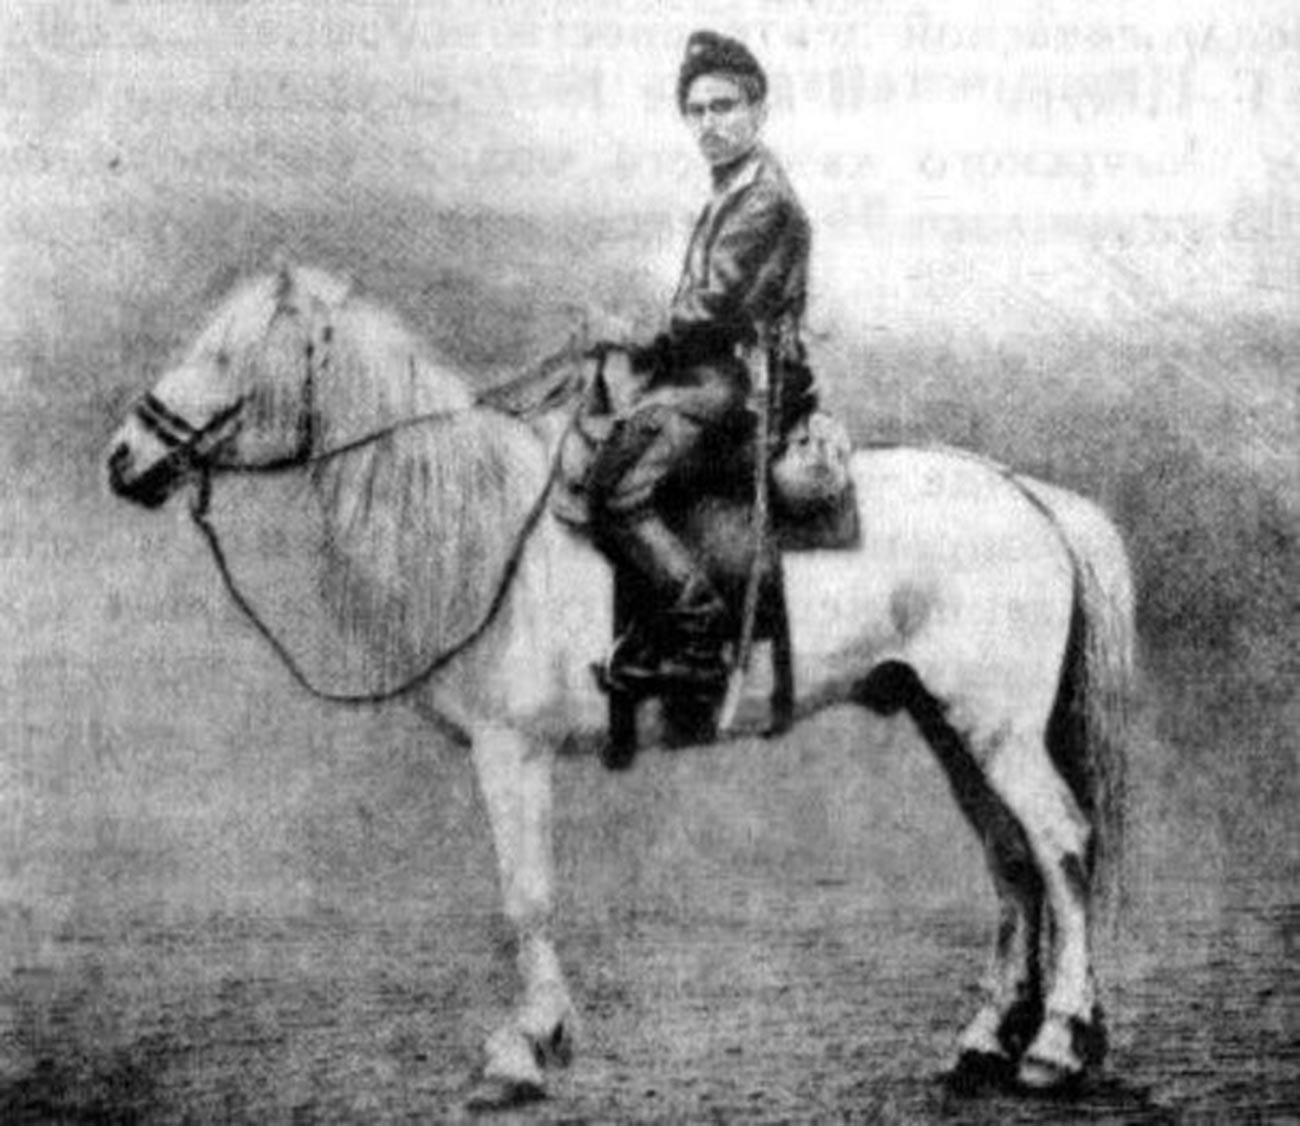 Peshkov di atas kudanya.